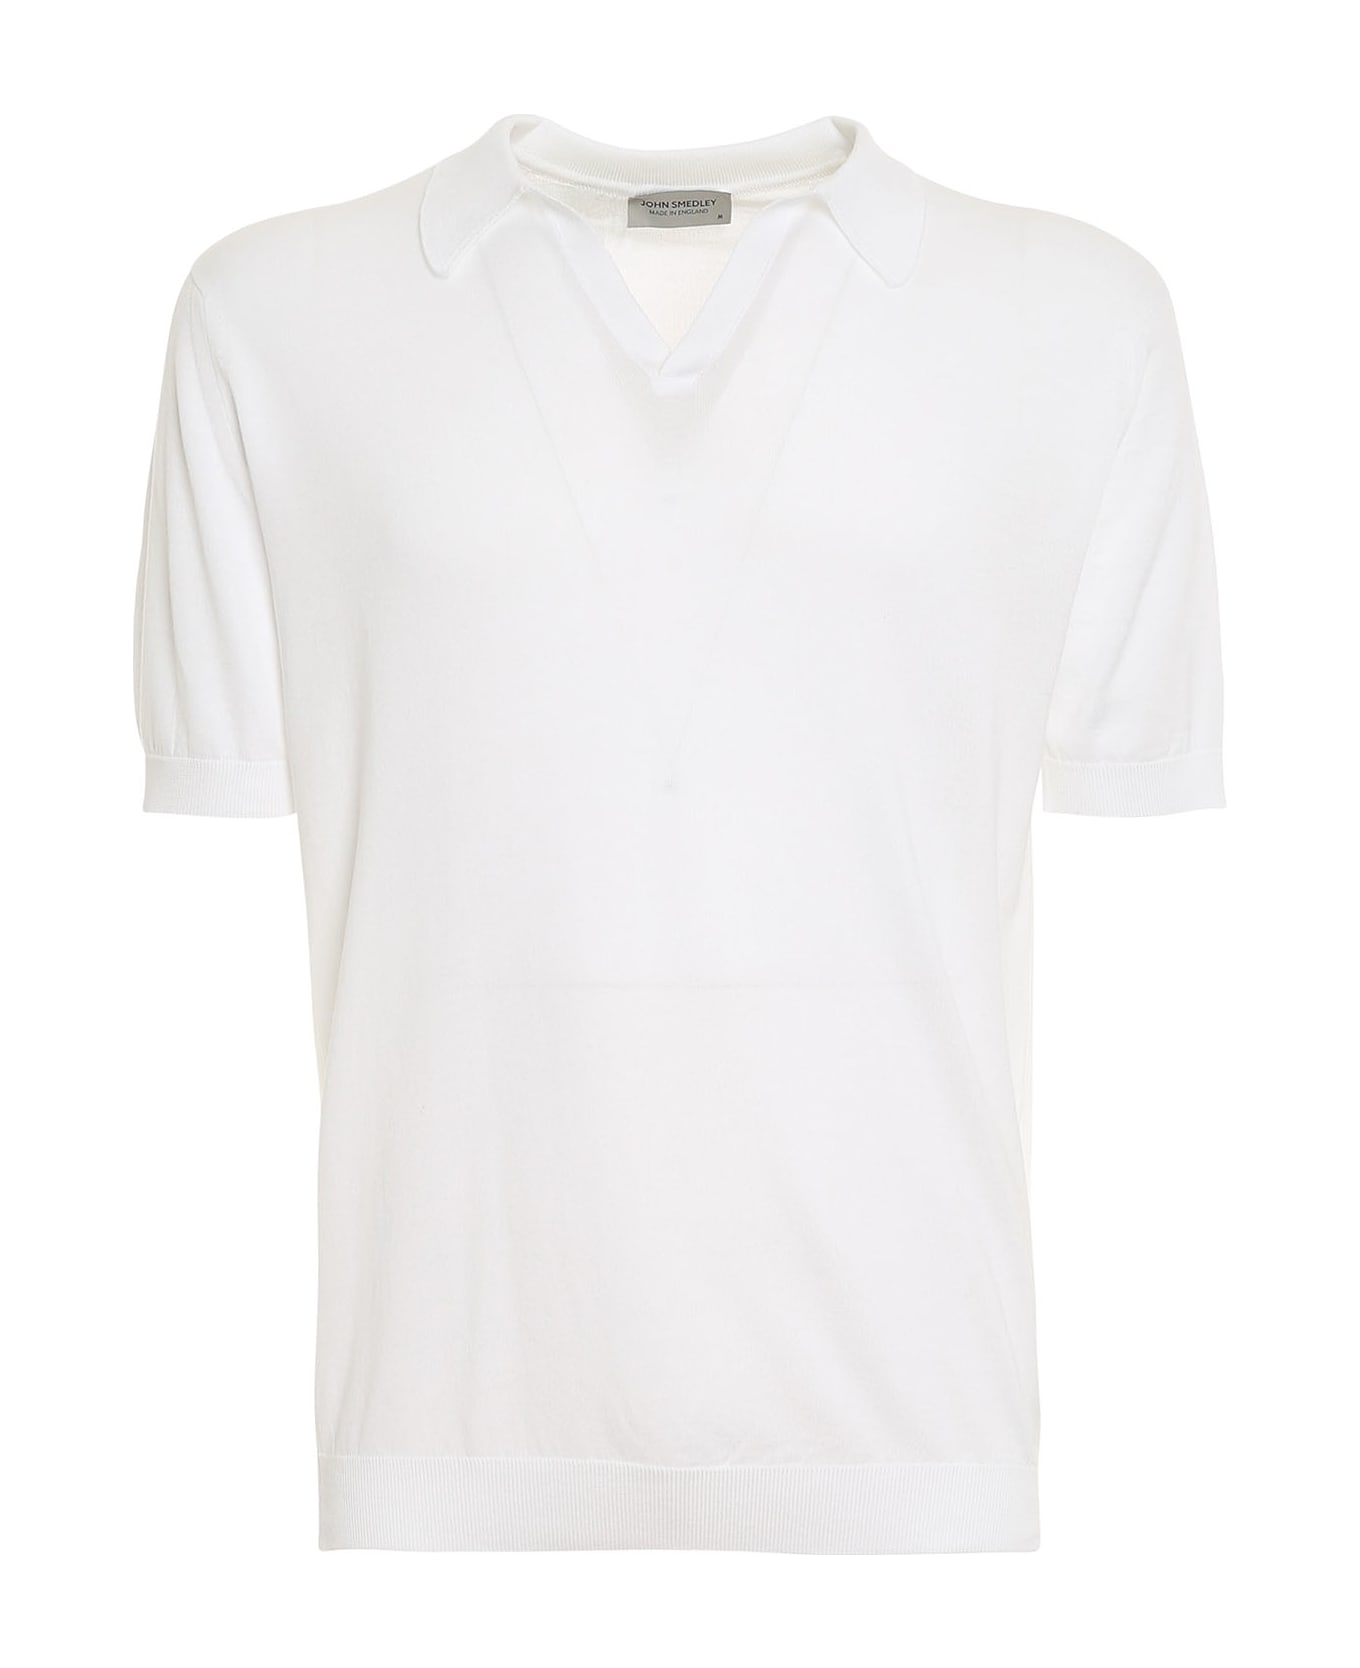 John Smedley Noah Skipper Collar Shirt Ss - White